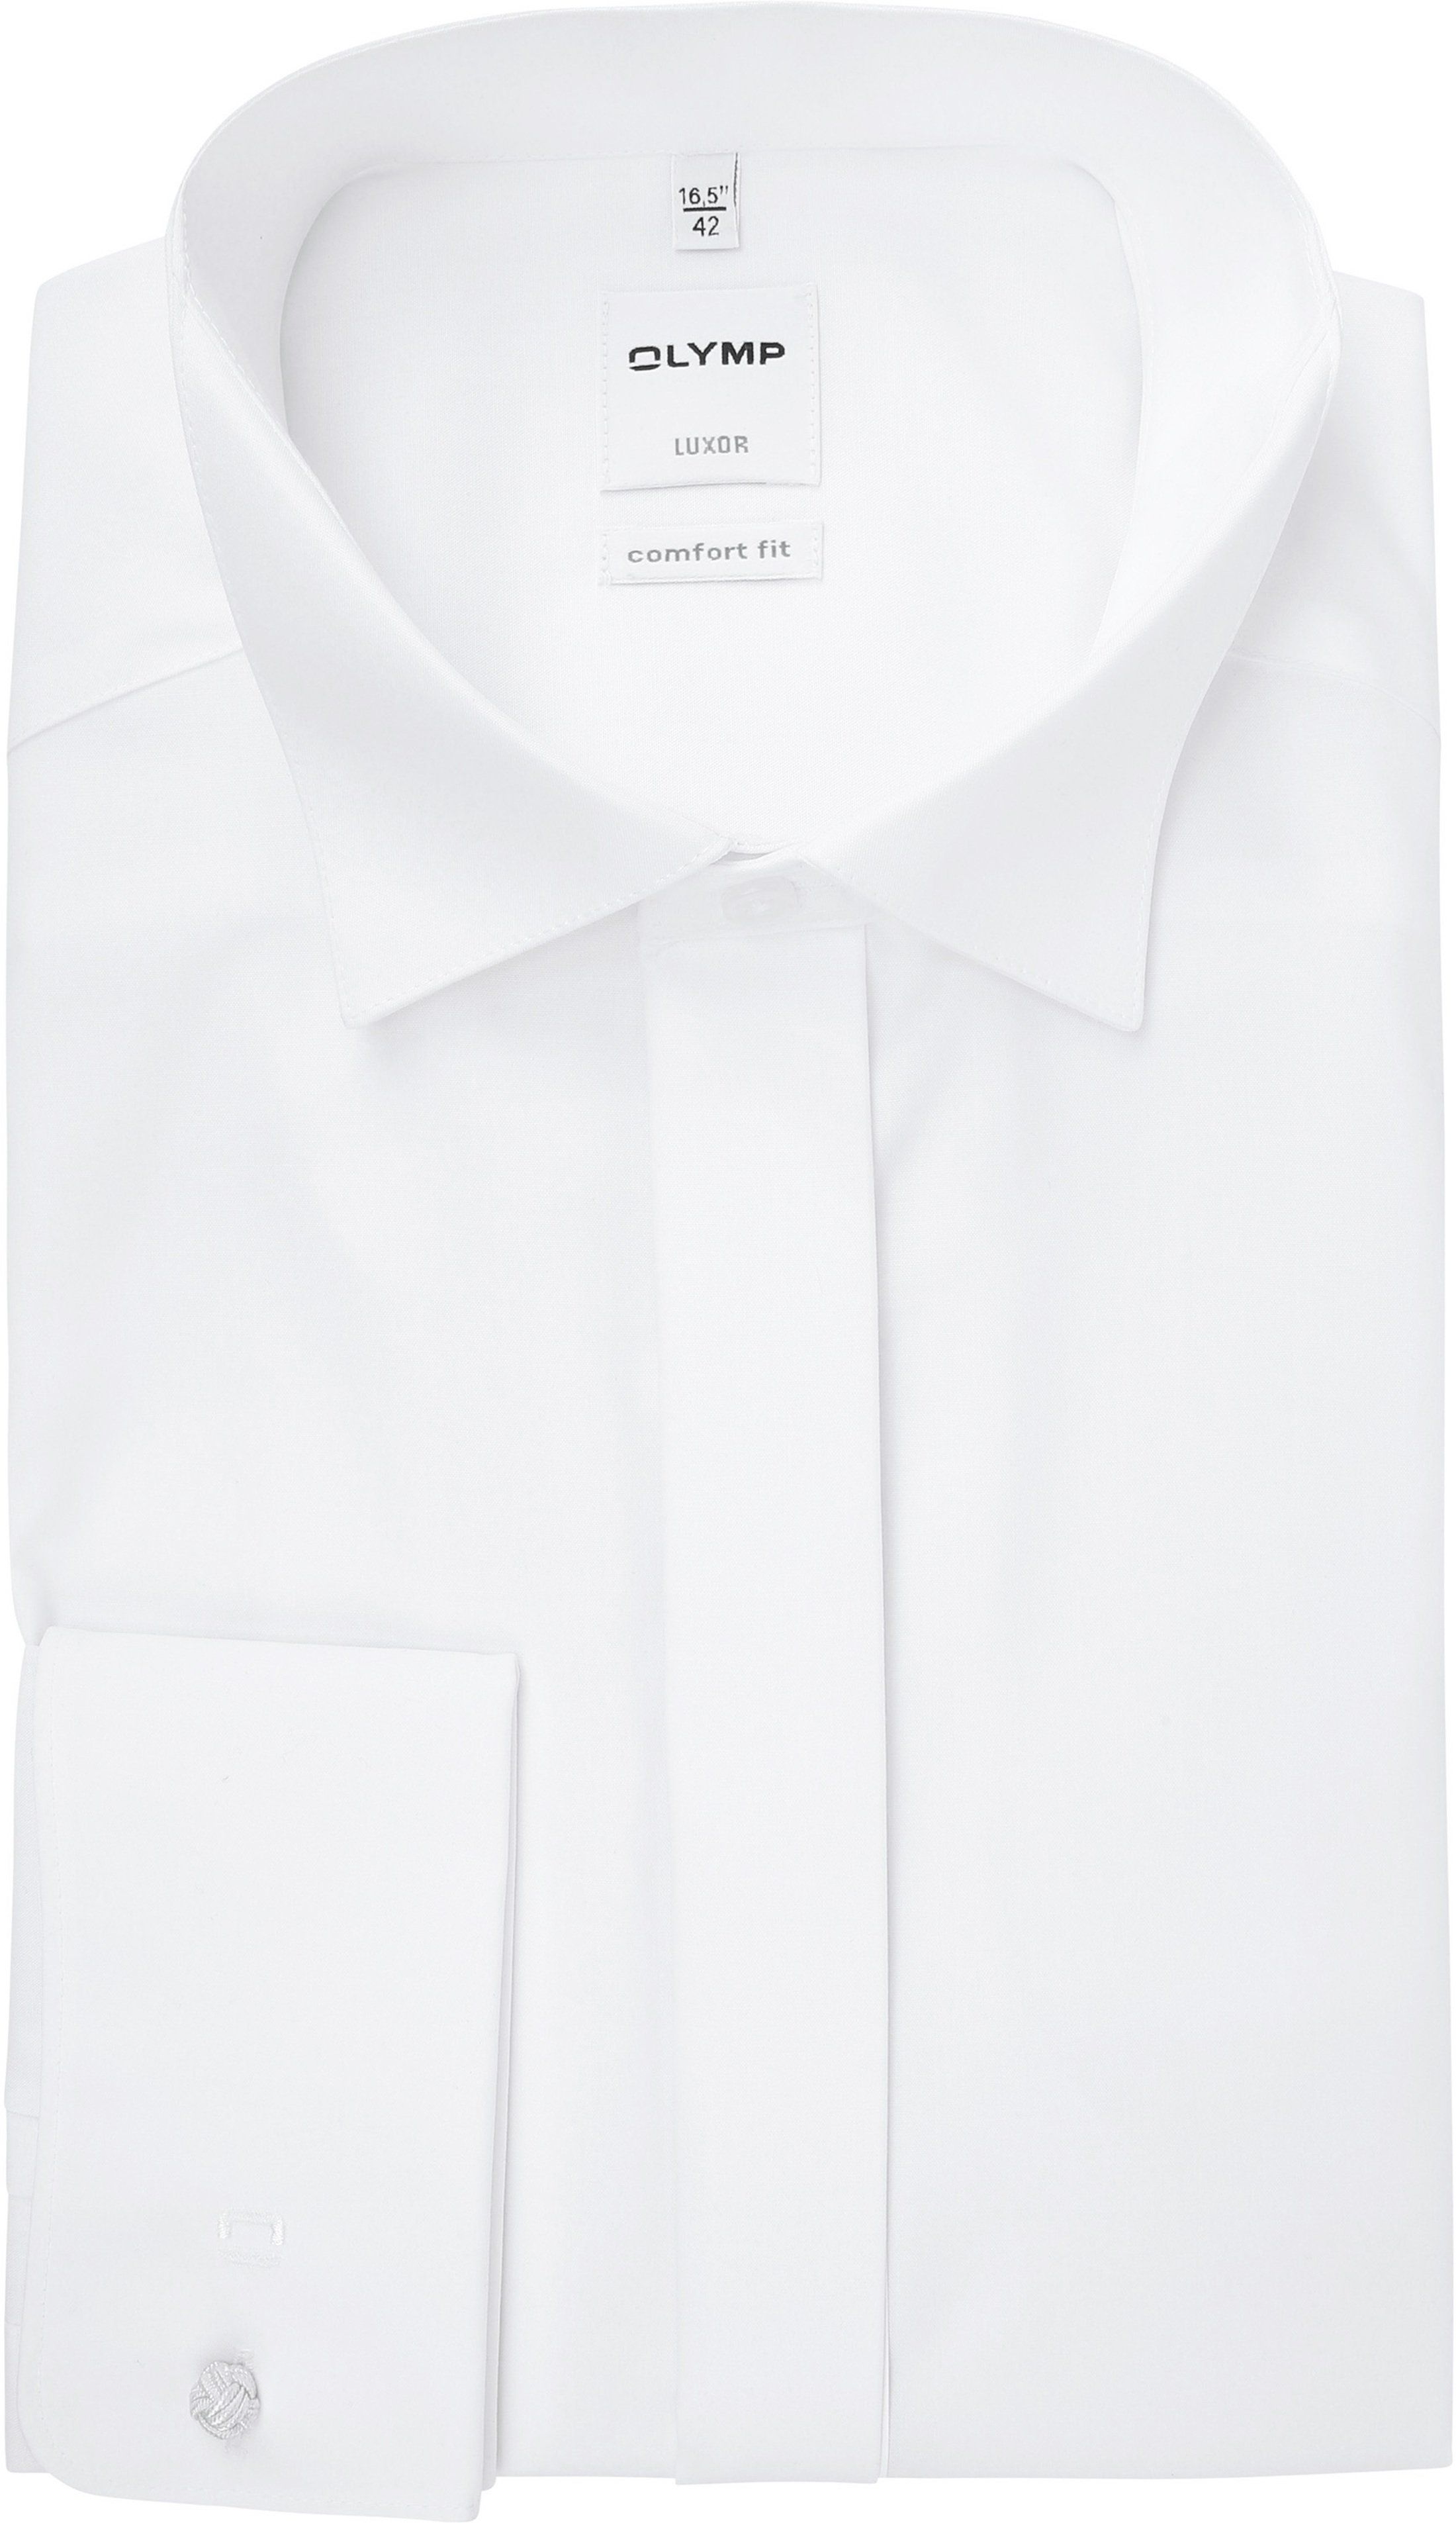 Olymp Luxor Shirt CF White size 15 1/2